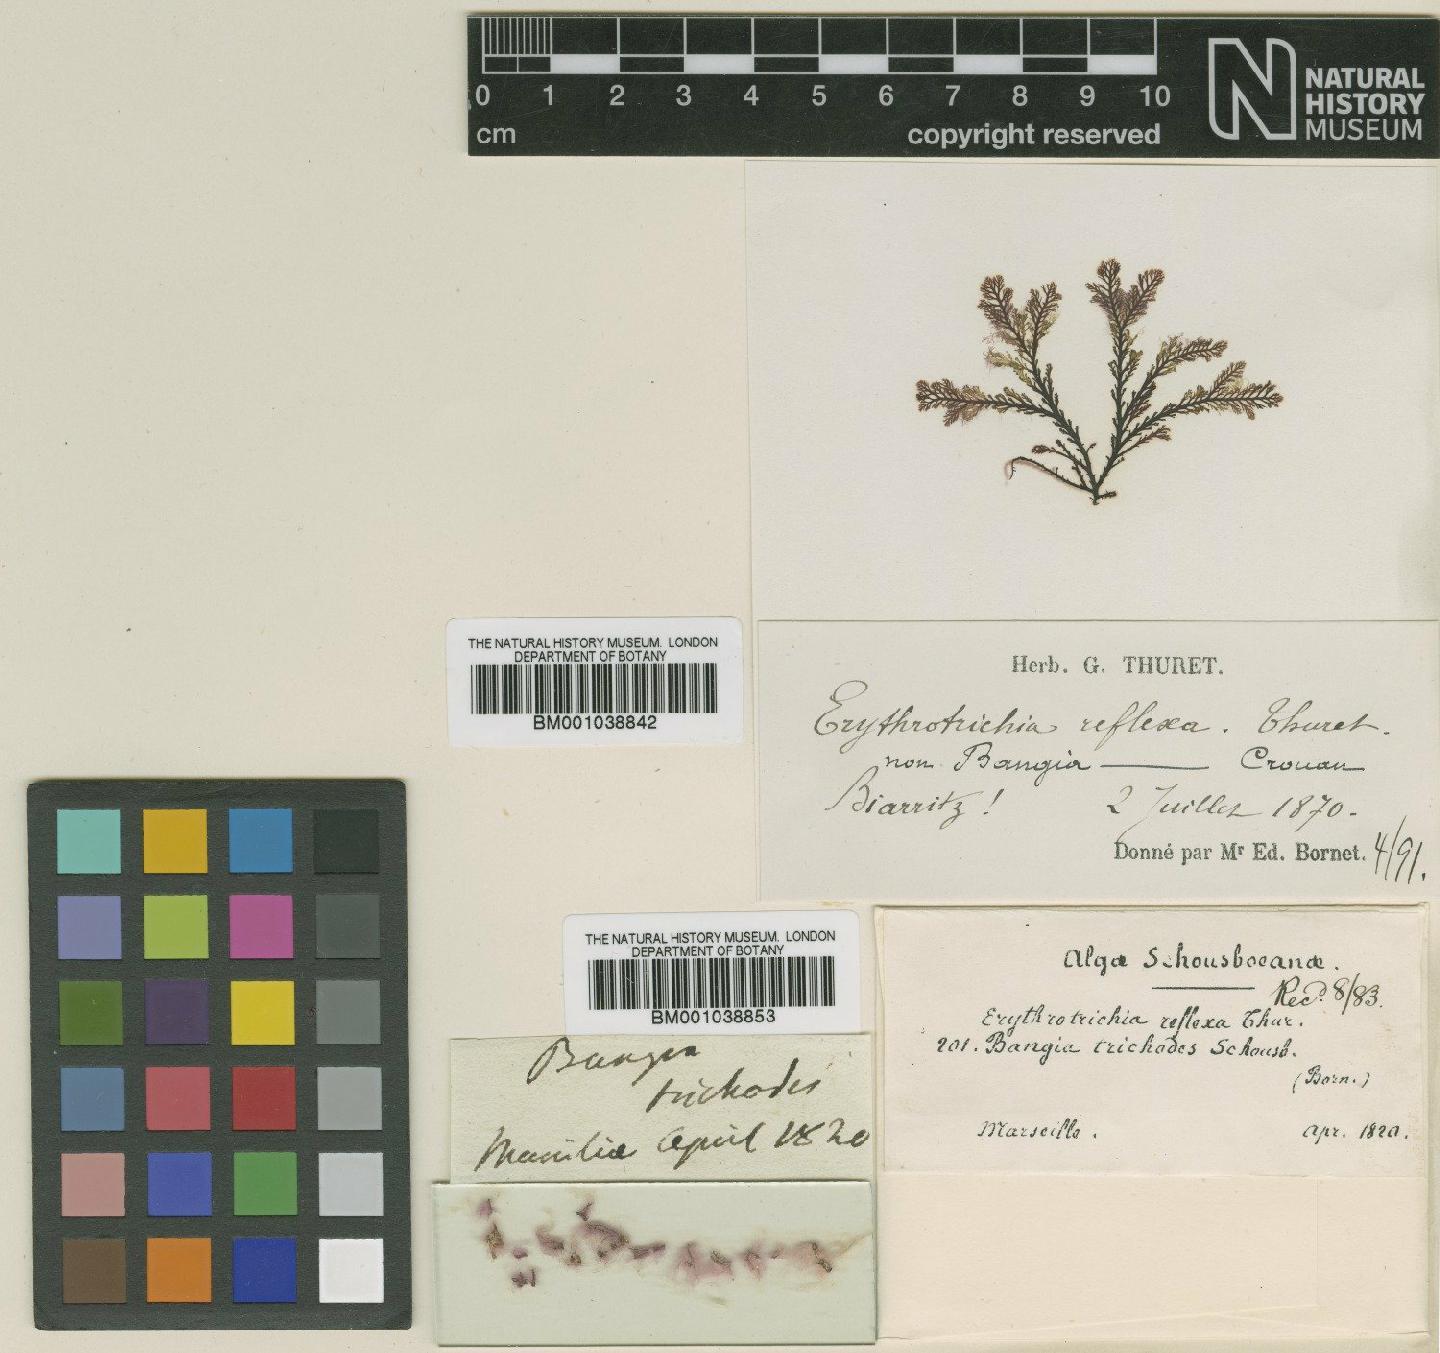 To NHMUK collection (Erythrotrichia reflexa (P.Crouan & H.Crouan) Thuret ex De Toni; TYPE; NHMUK:ecatalogue:682015)